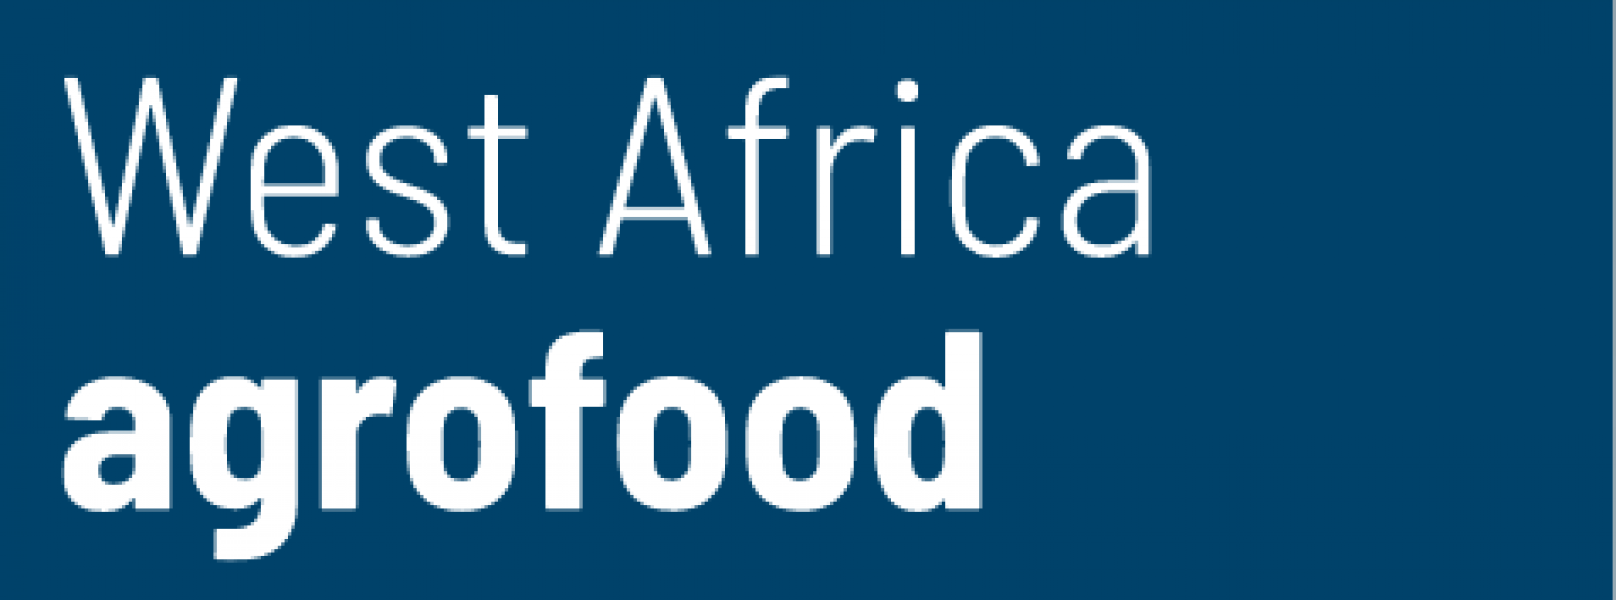 Logotipo de West Africa Agrofood